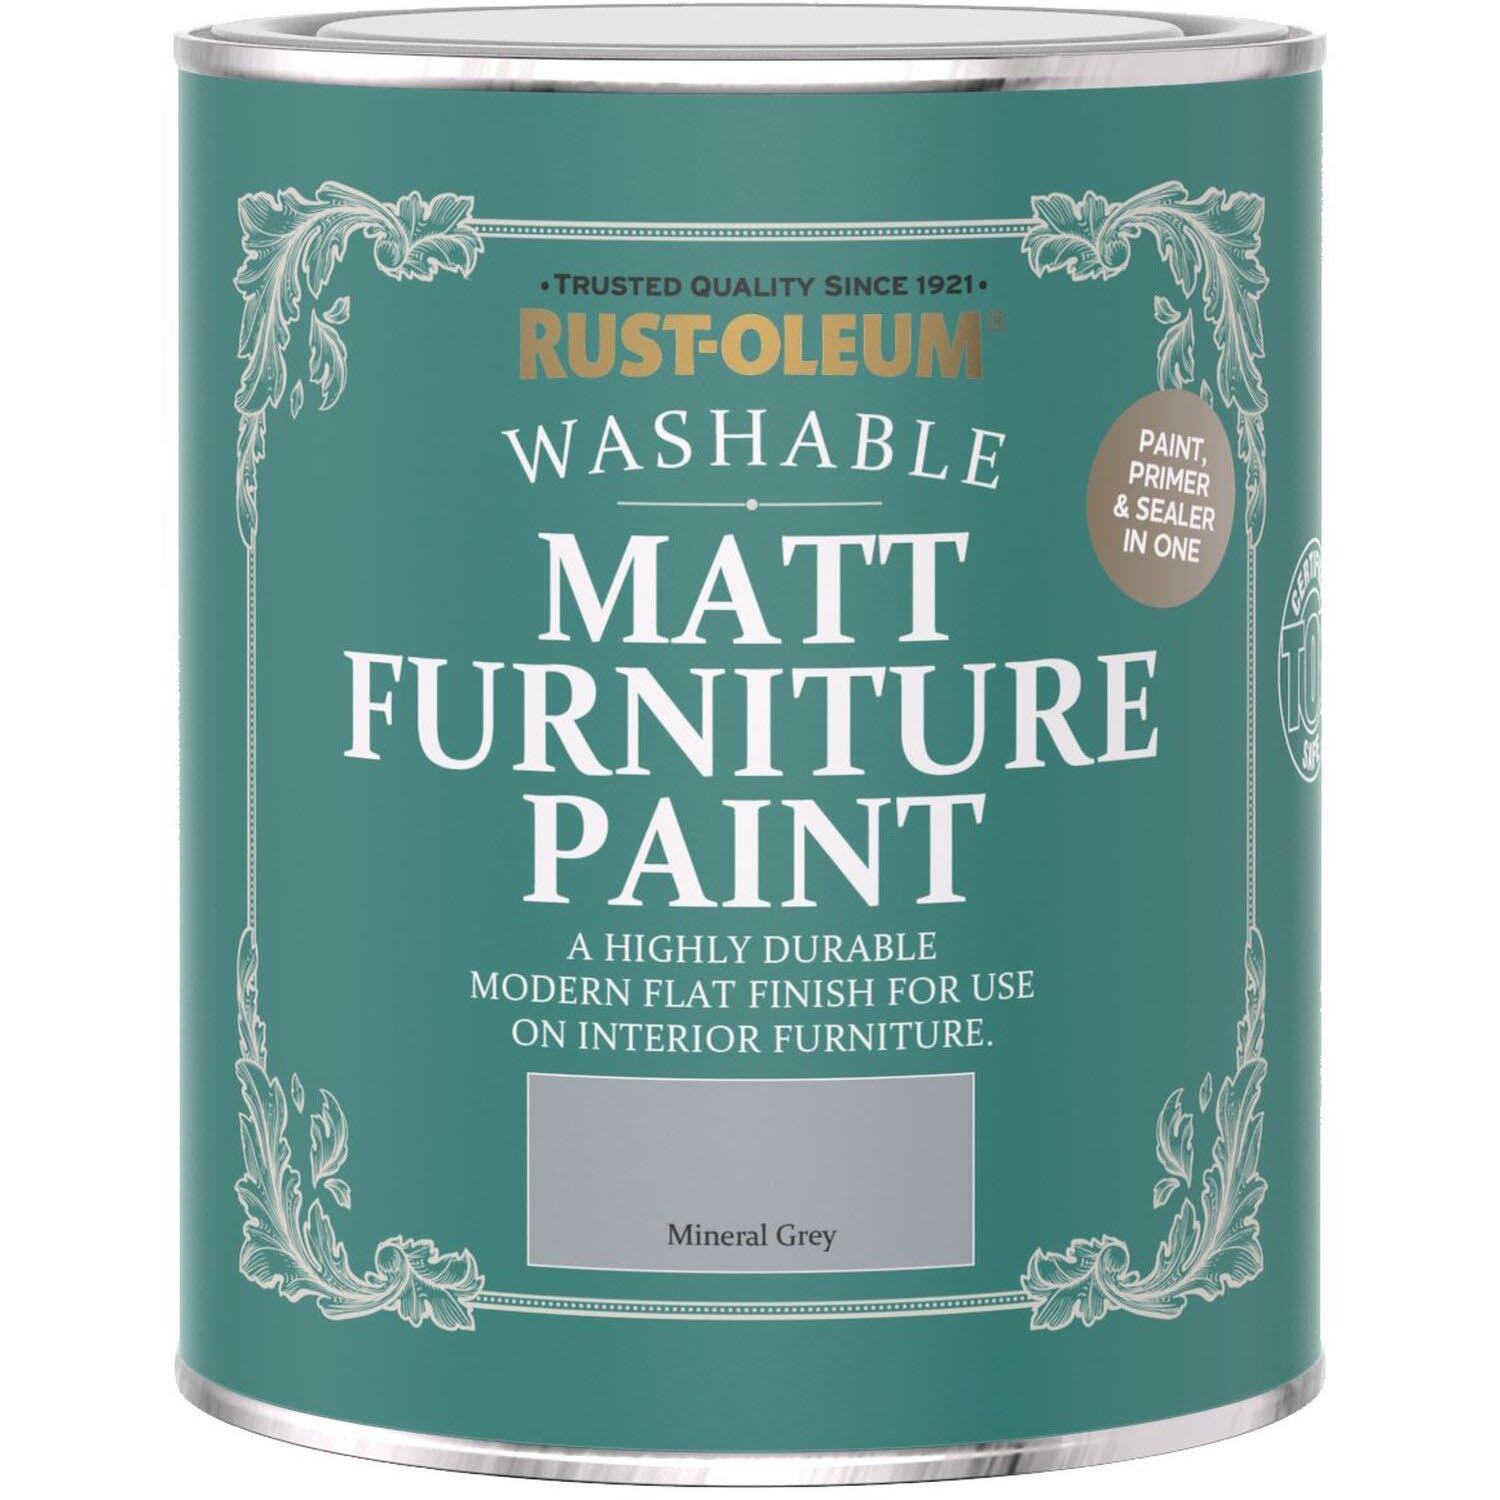 Rust-Oleum Mineral Grey Matt Furniture Paint 750ml Image 2